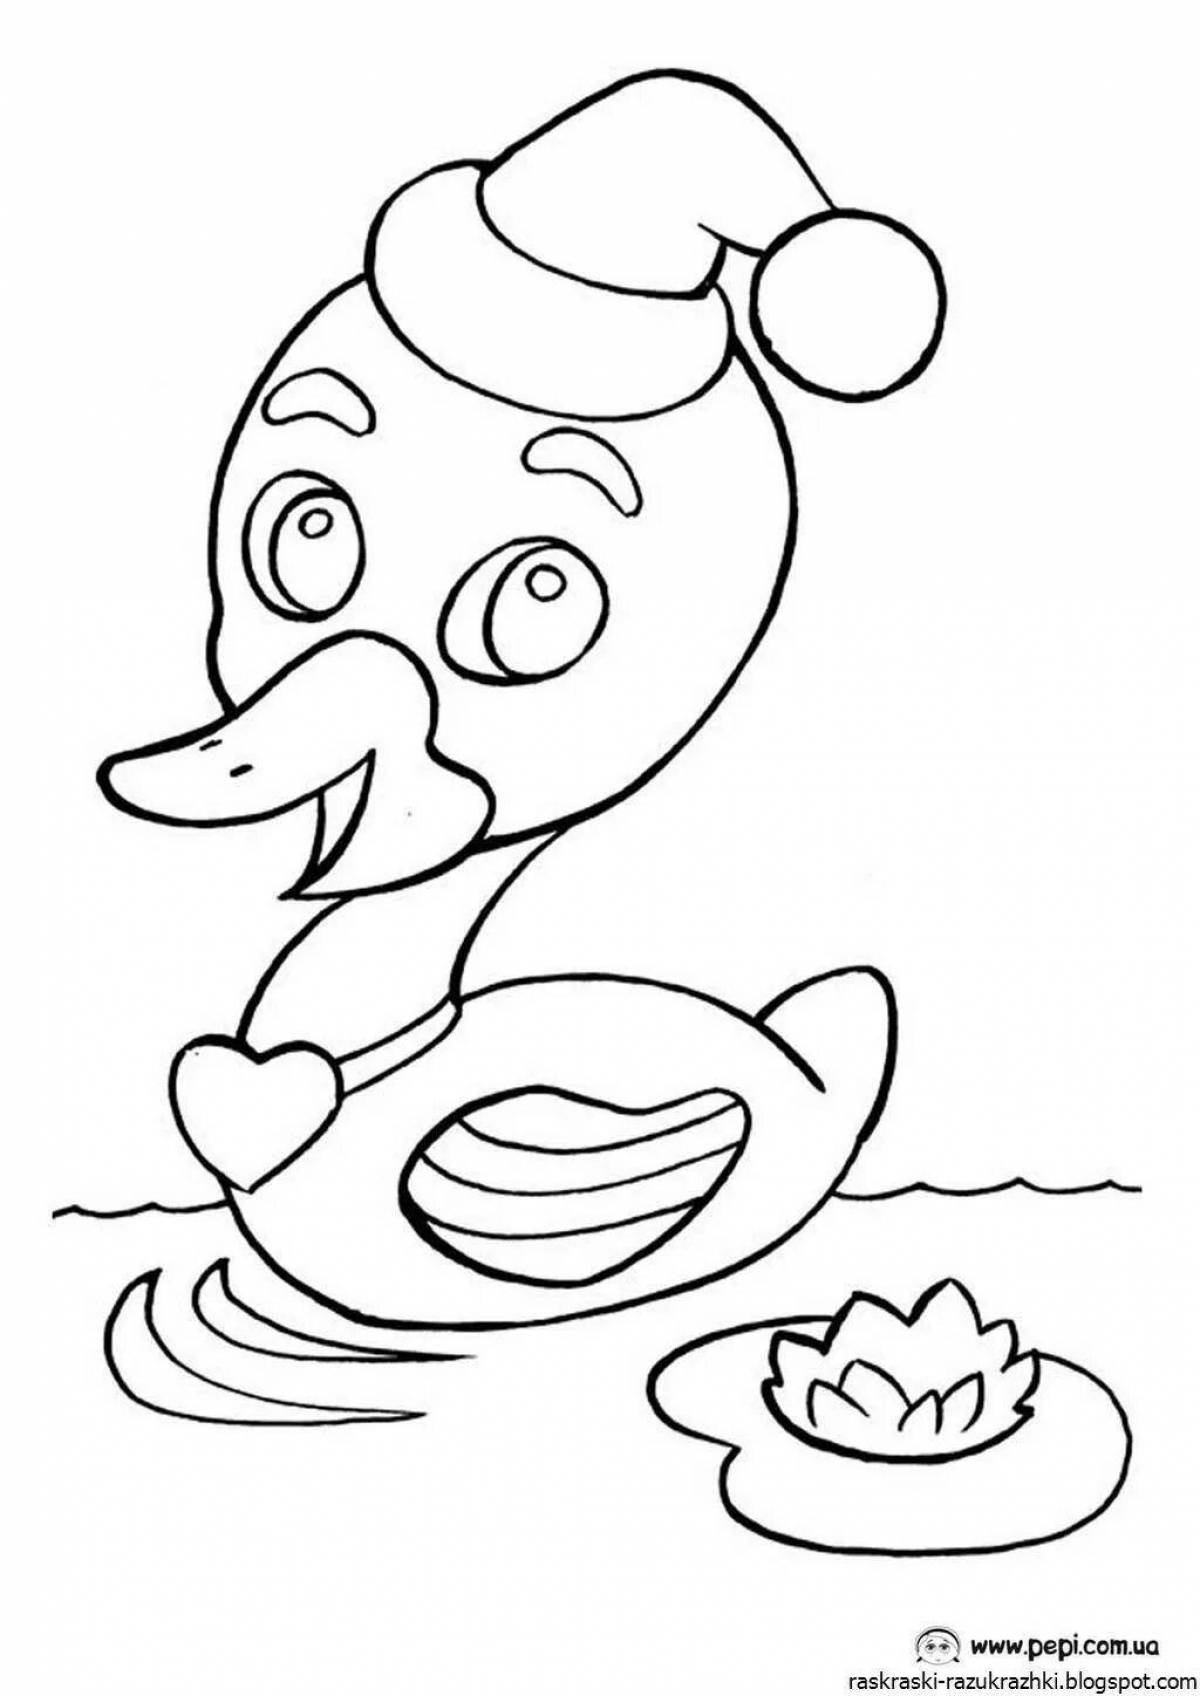 Creative coloring lalafanfan duck